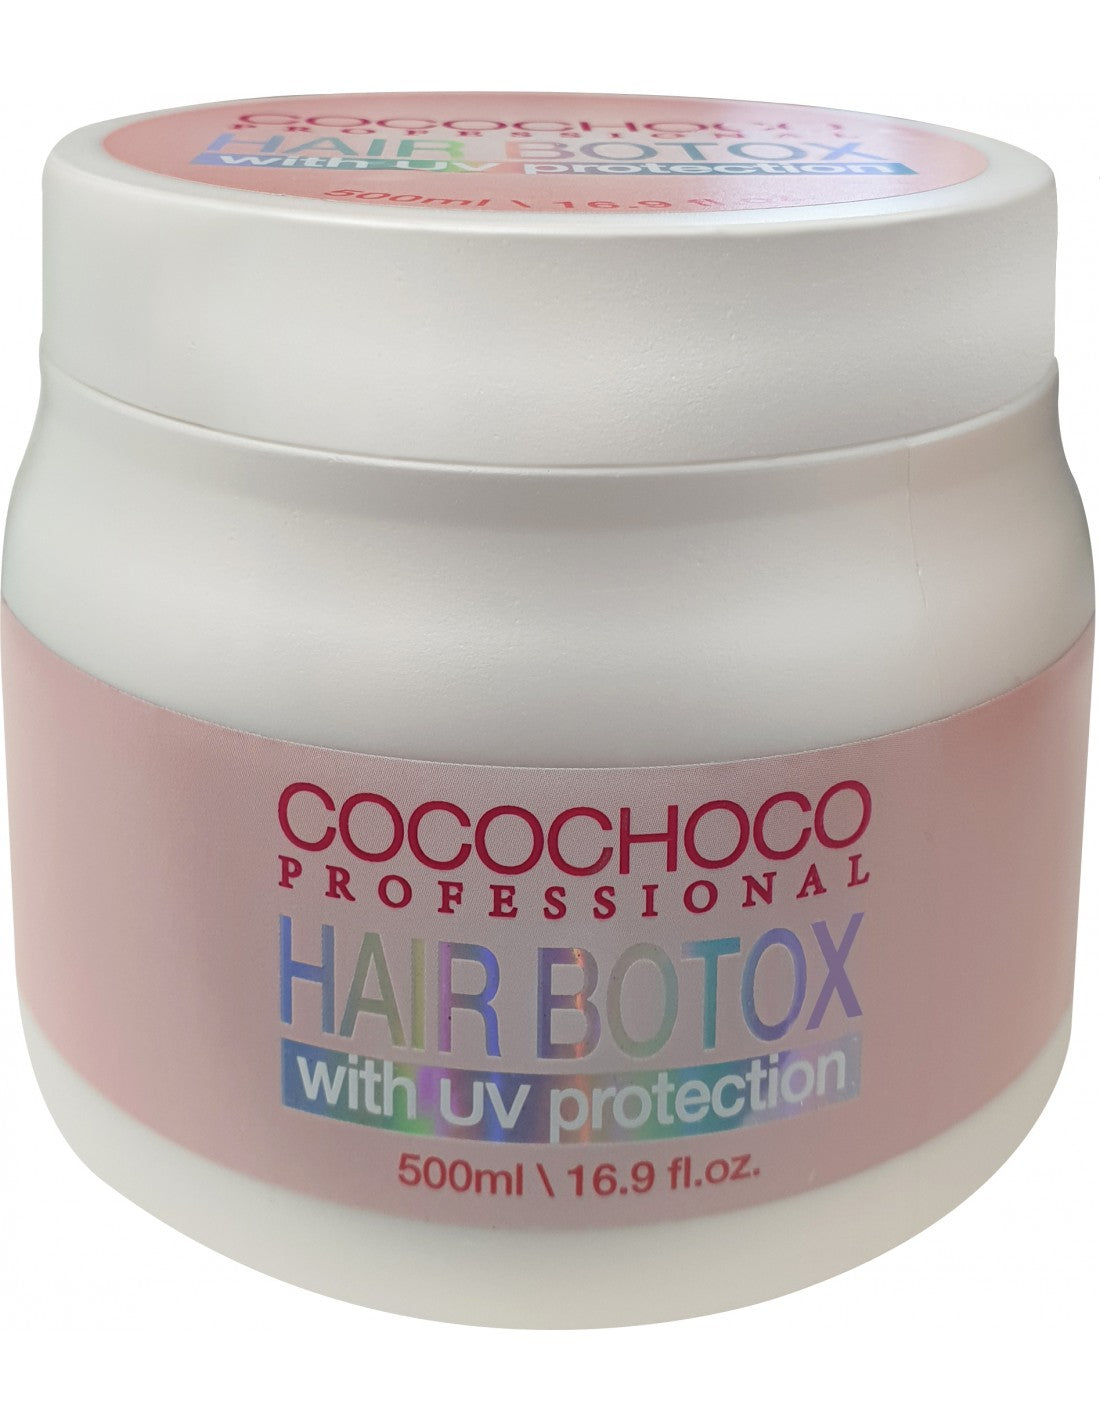 COCOCHOCO PROFESSIONAL HAIR BOTOX 500ml x 6